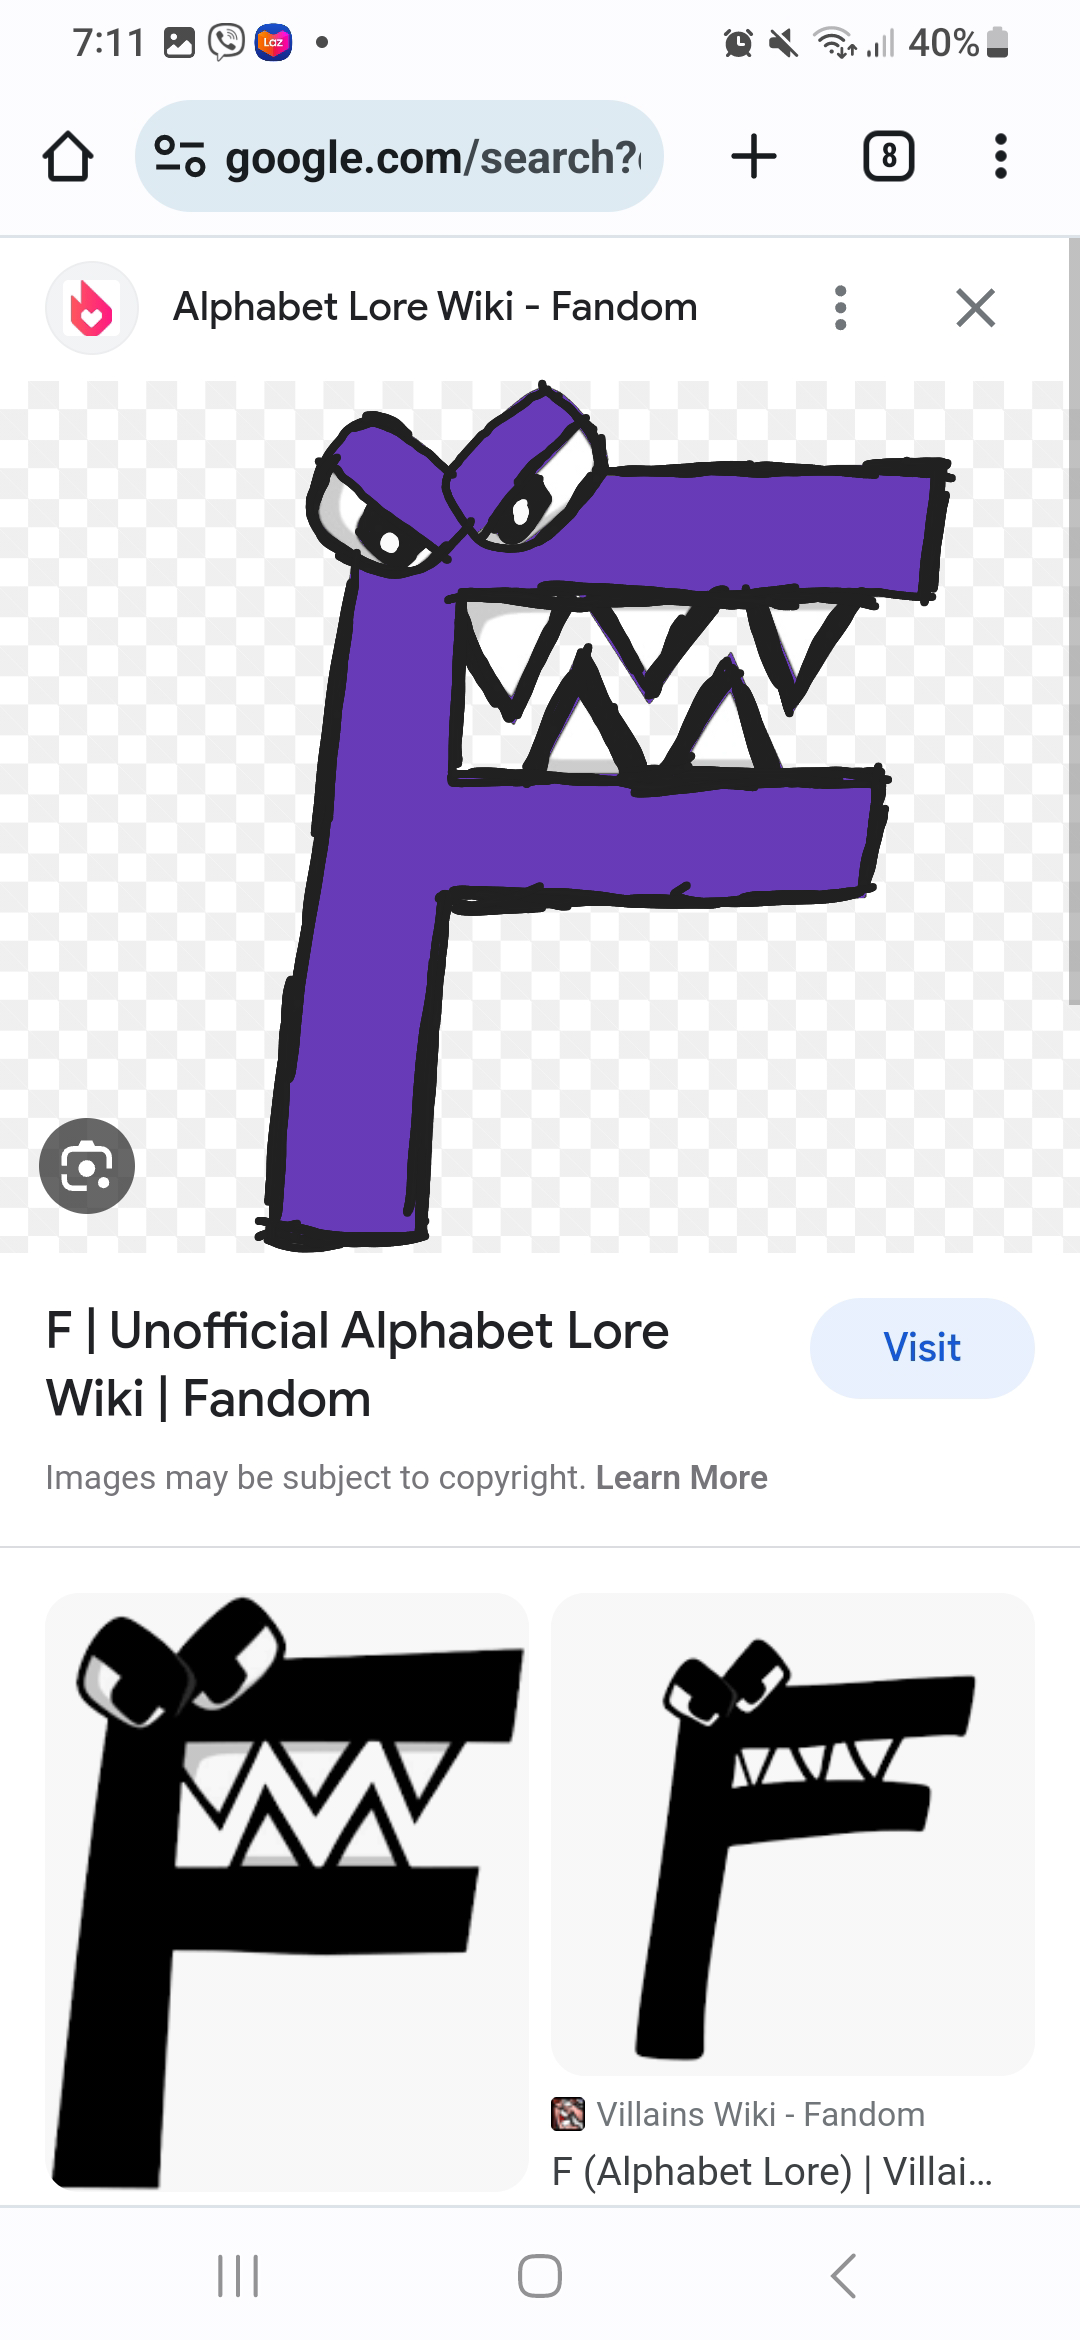 F, Unofficial Alphabet Lore Wiki, Fandom in 2023